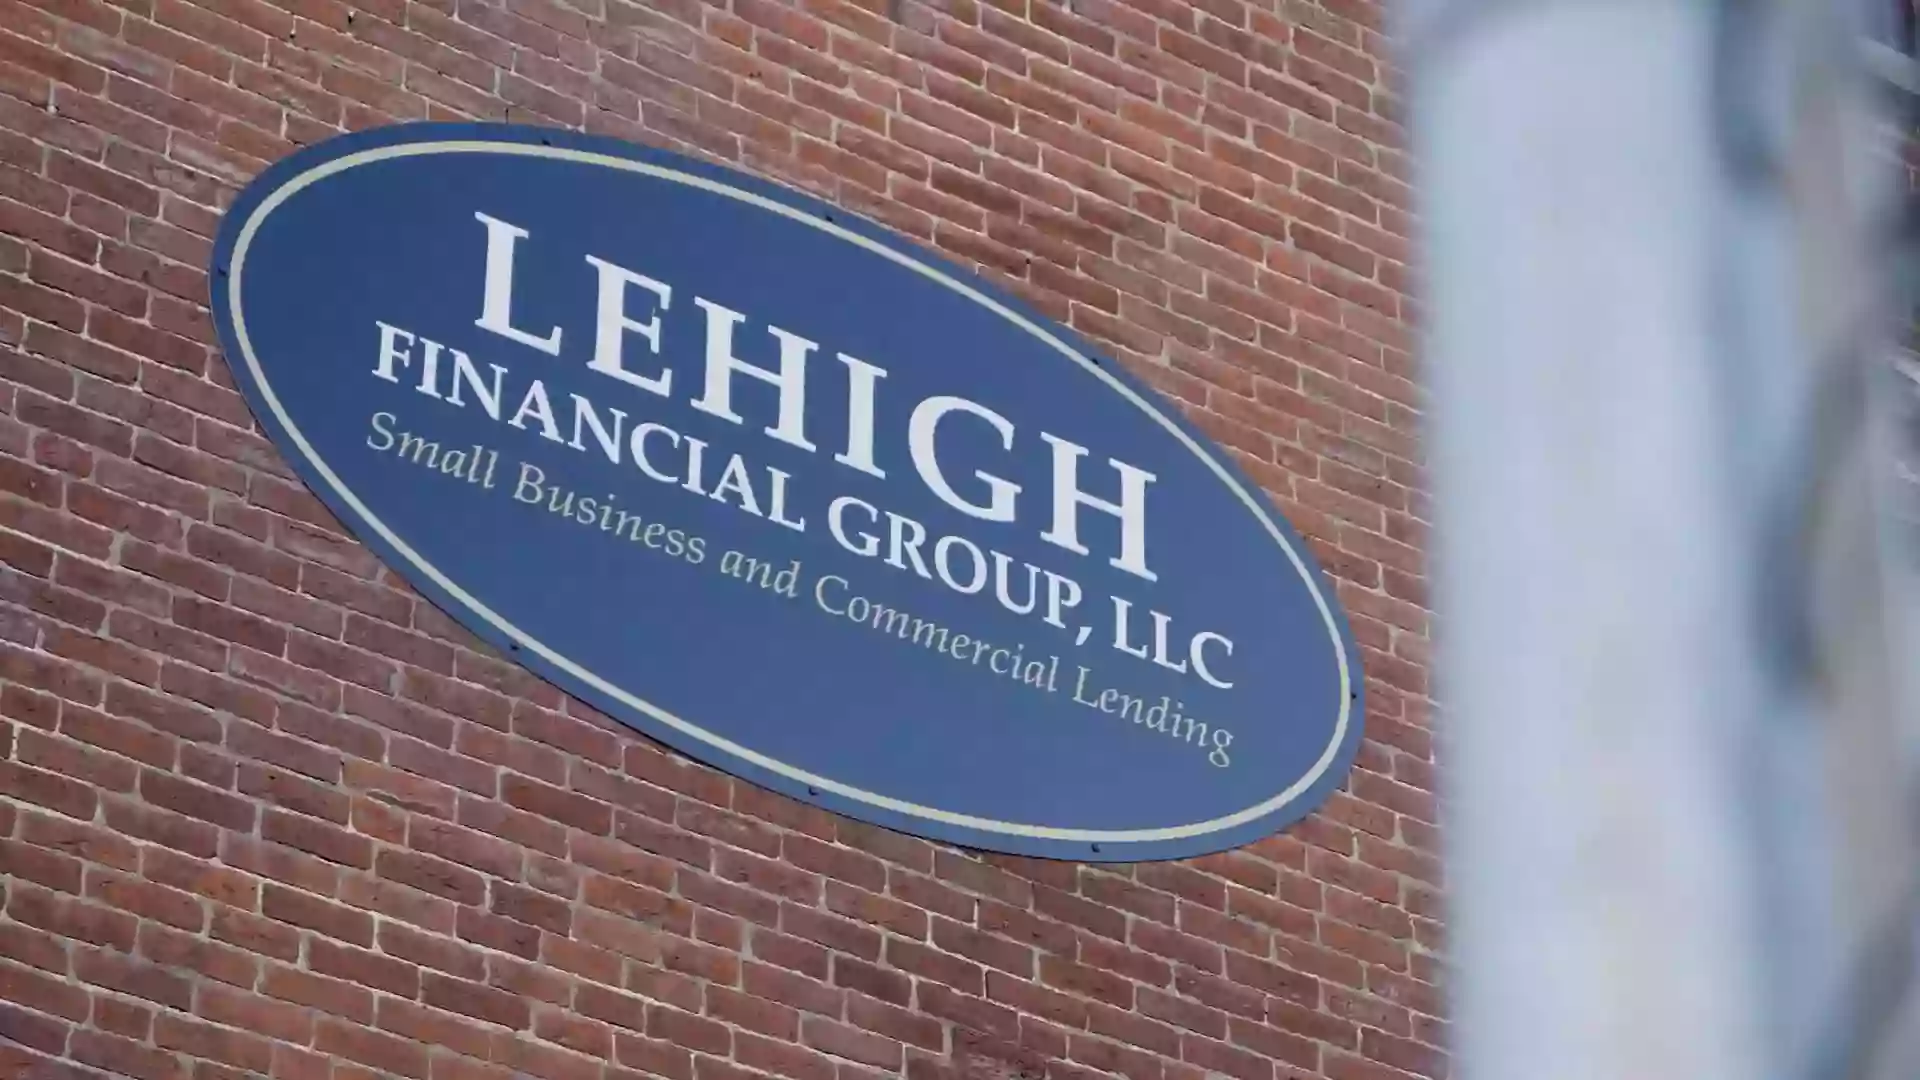 Lehigh Financial Group LLC